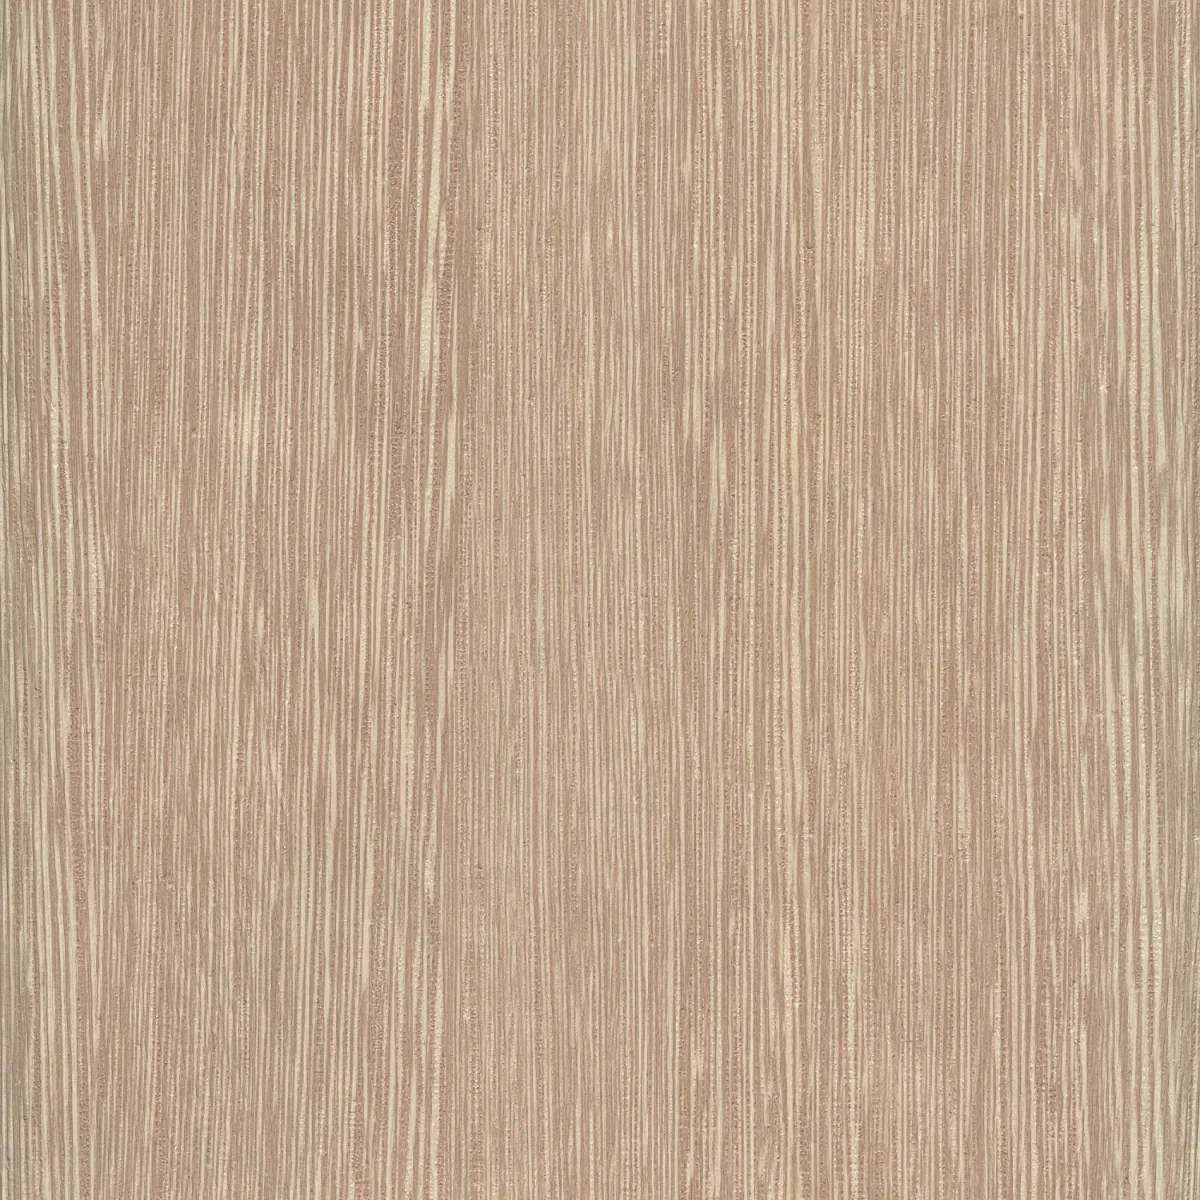 Столешница Кедр Дуб сонома светлый / Канадский дуб, 3050*600*38мм, R3